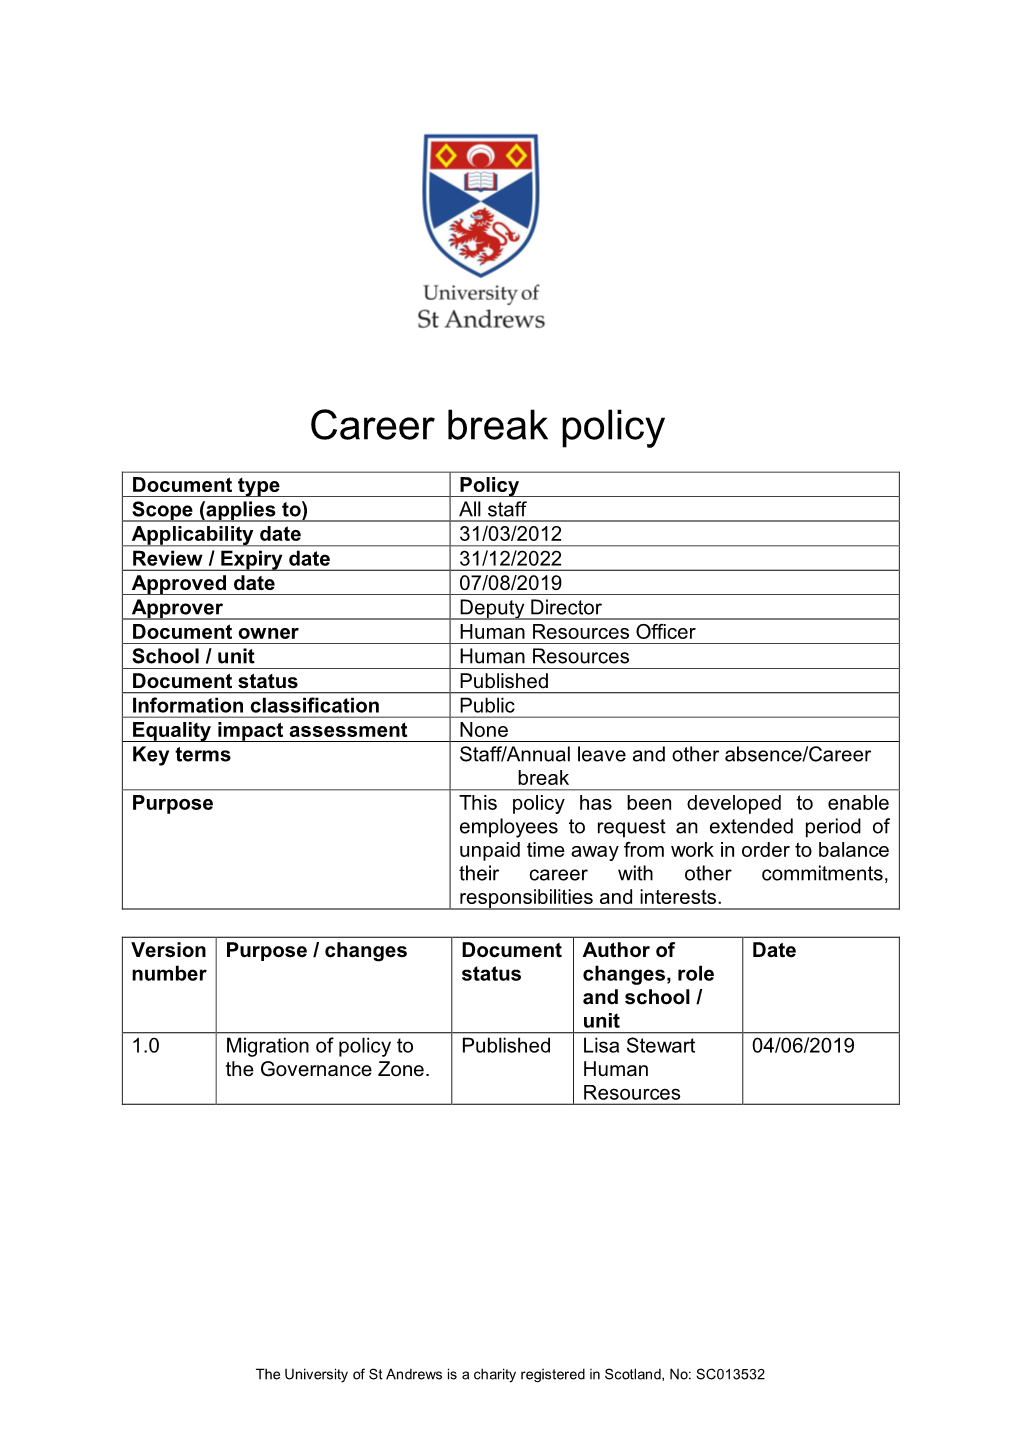 Career Break Policy